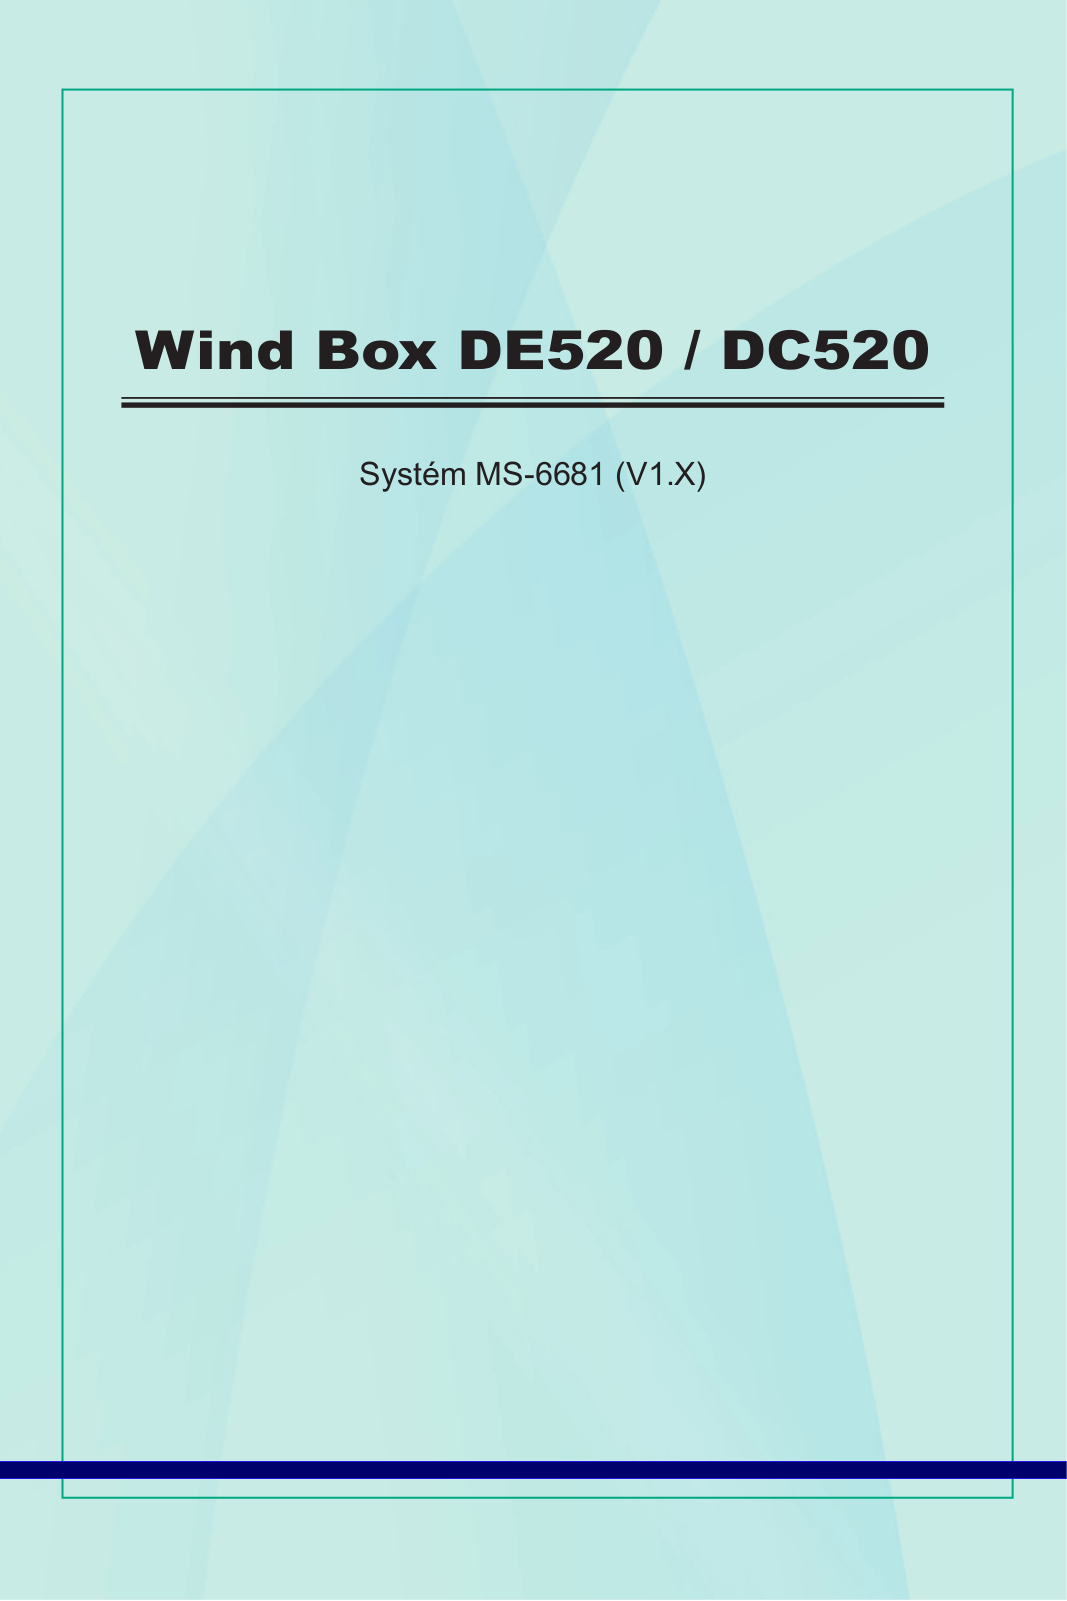 Msi WIND BOX DE520, WIND BOX DC520 User Manual